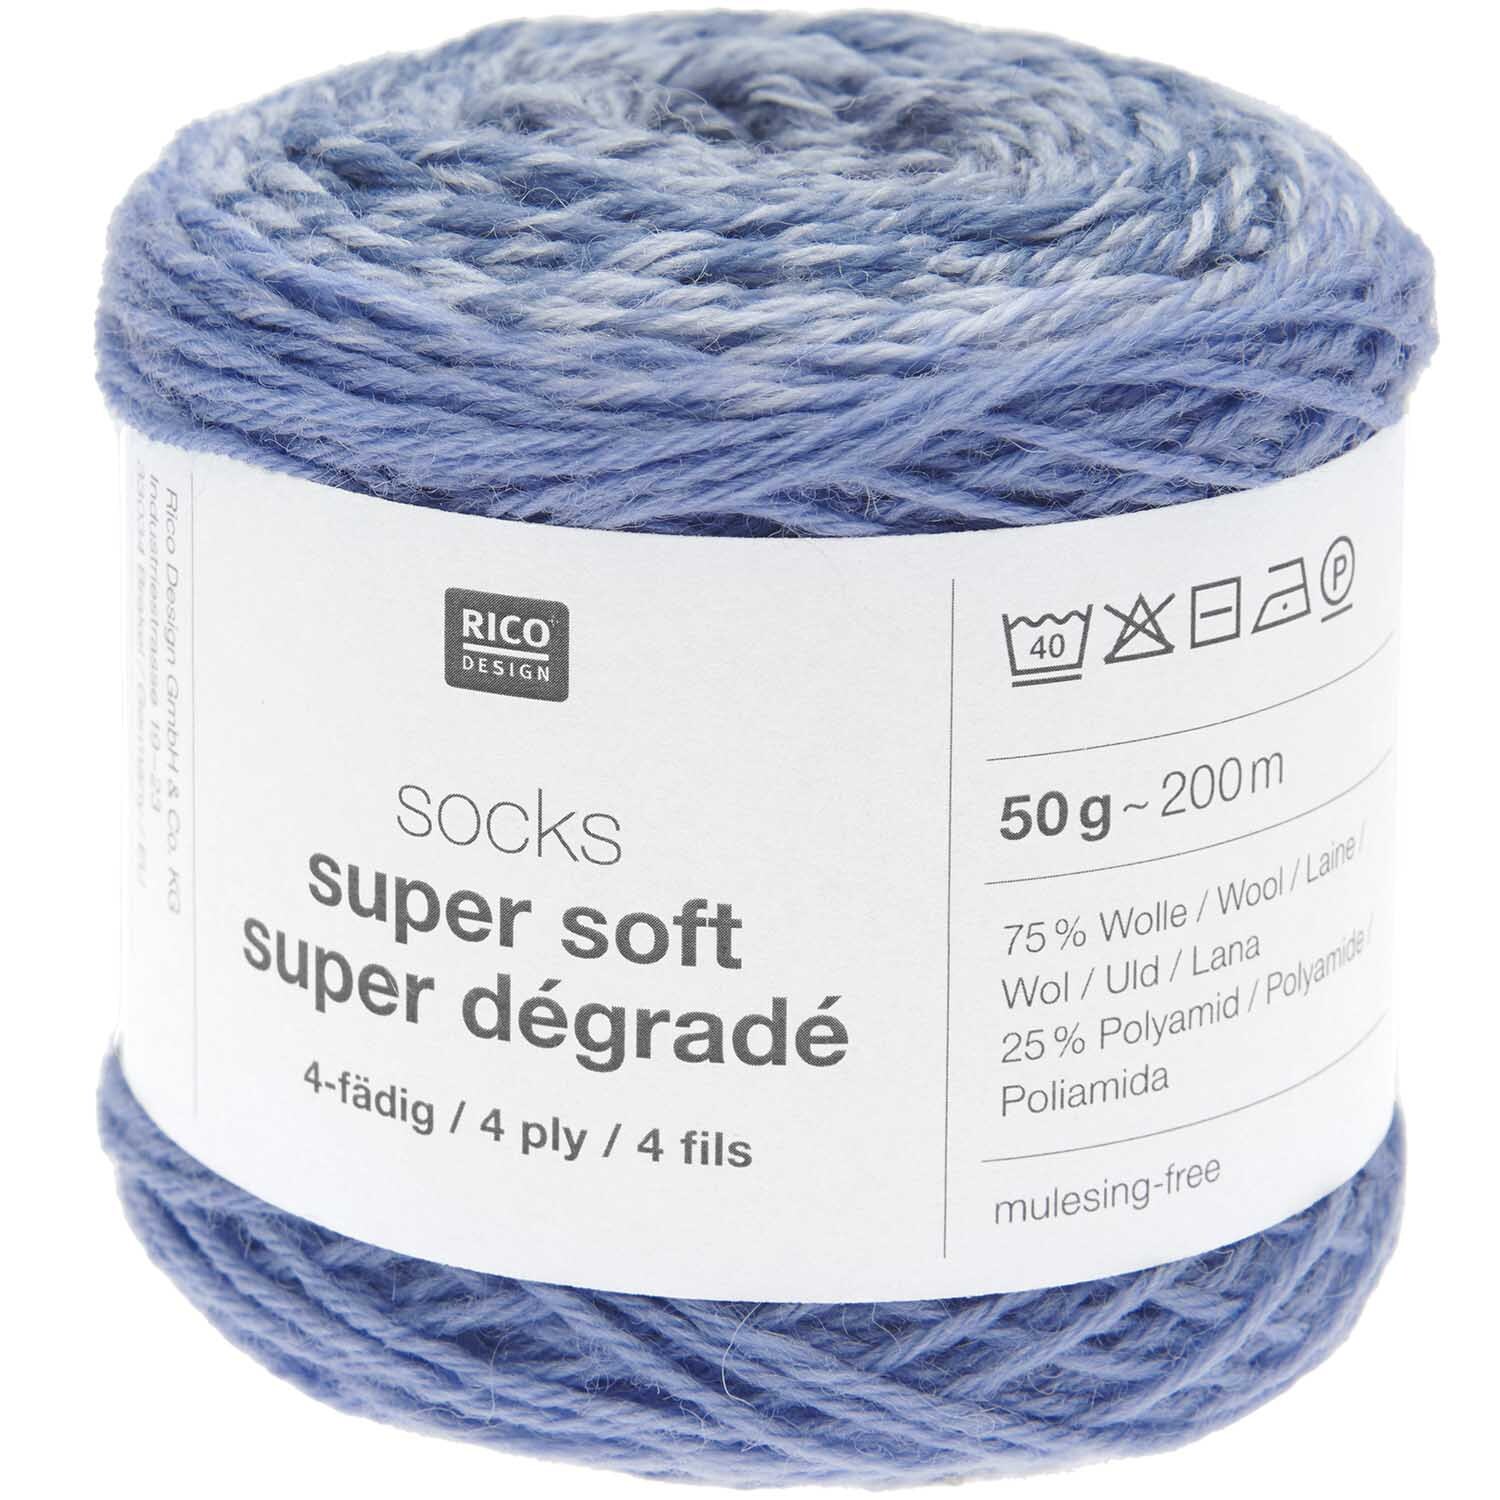 Socks Super Soft Super Dégradé 4-fädig